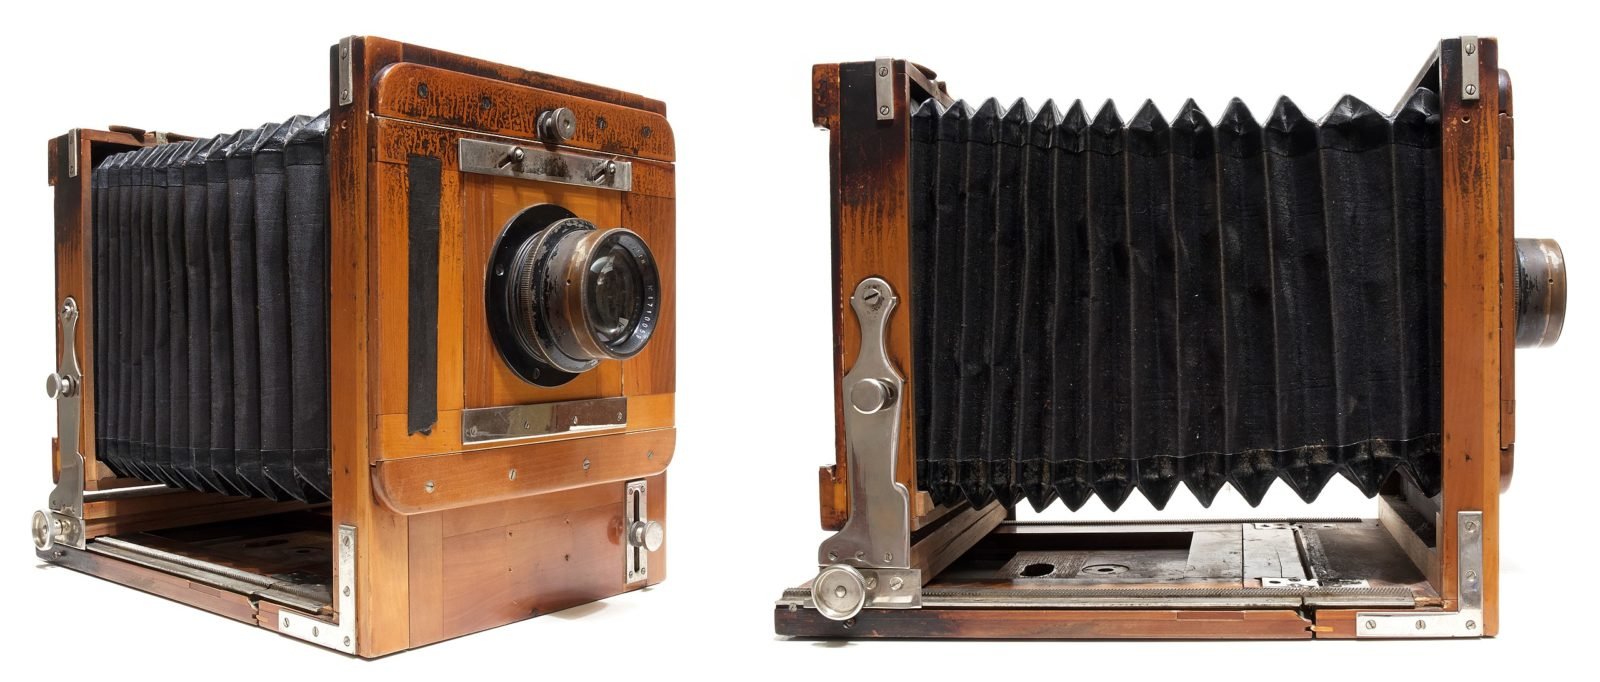 The First Camera Ever Made